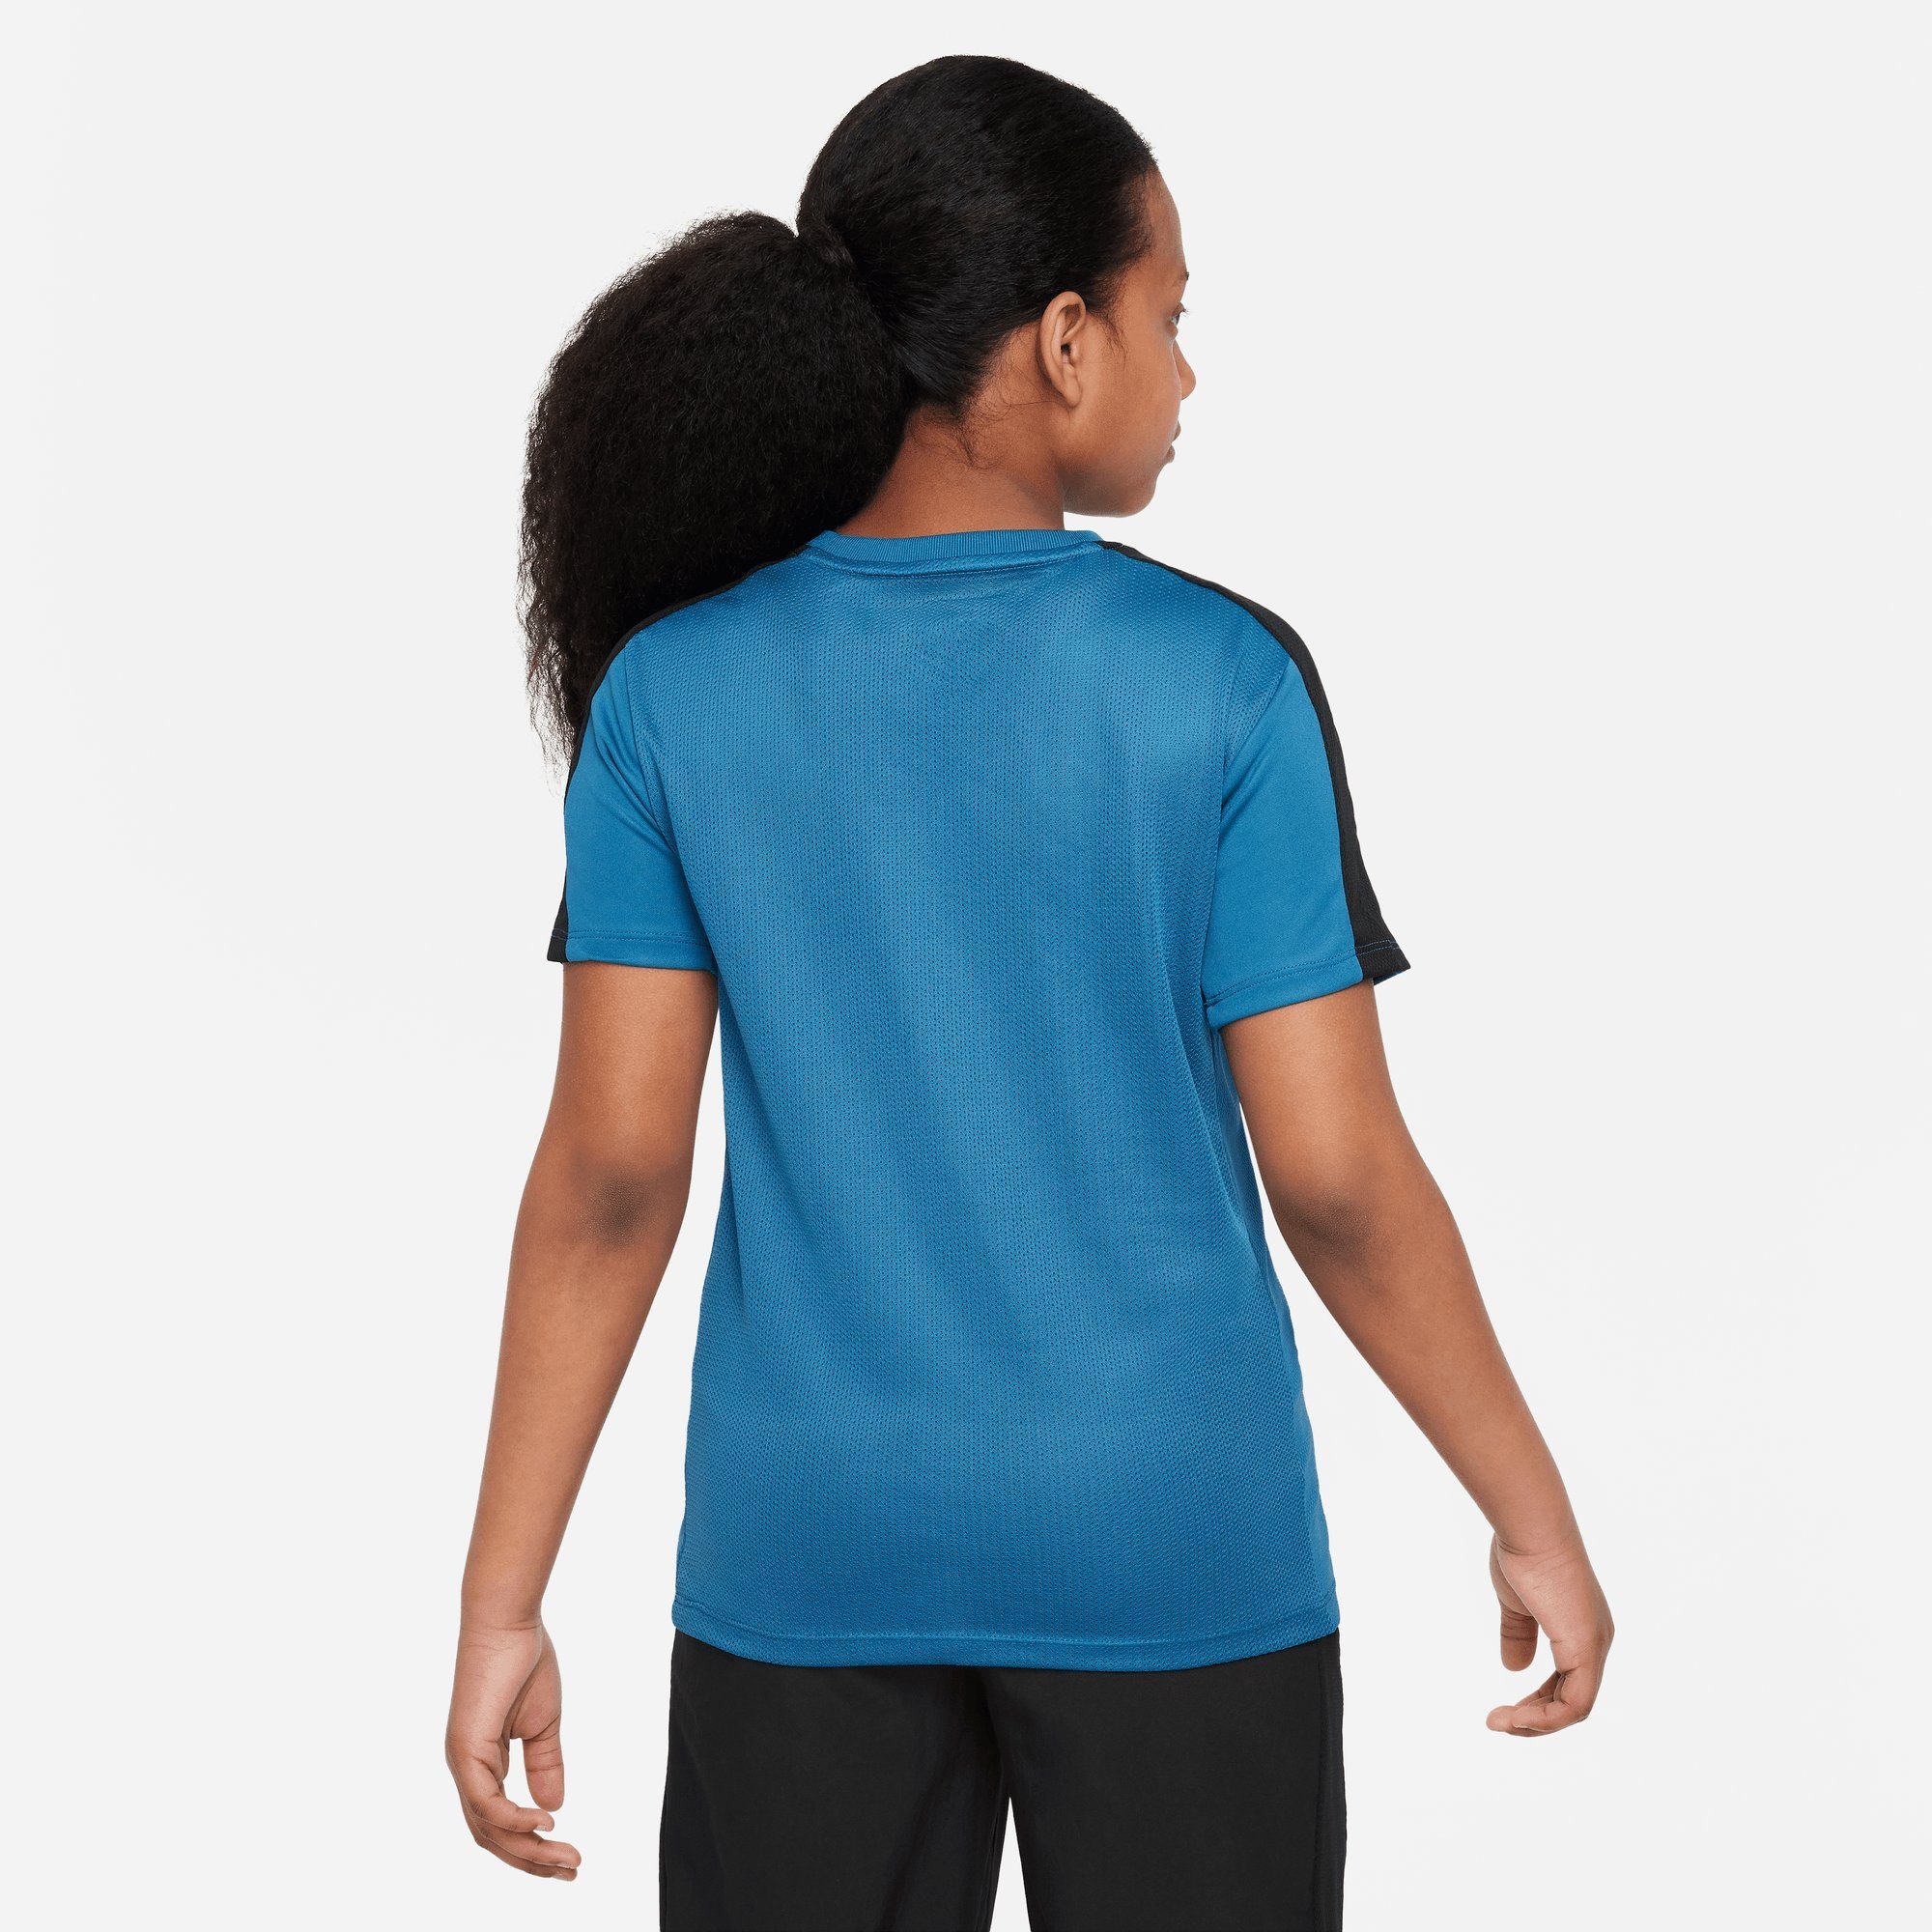 INDUSTRIAL BLUE/BLACK/BLACK DRI-FIT KIDS' ACADEMY Nike TOP Trainingsshirt